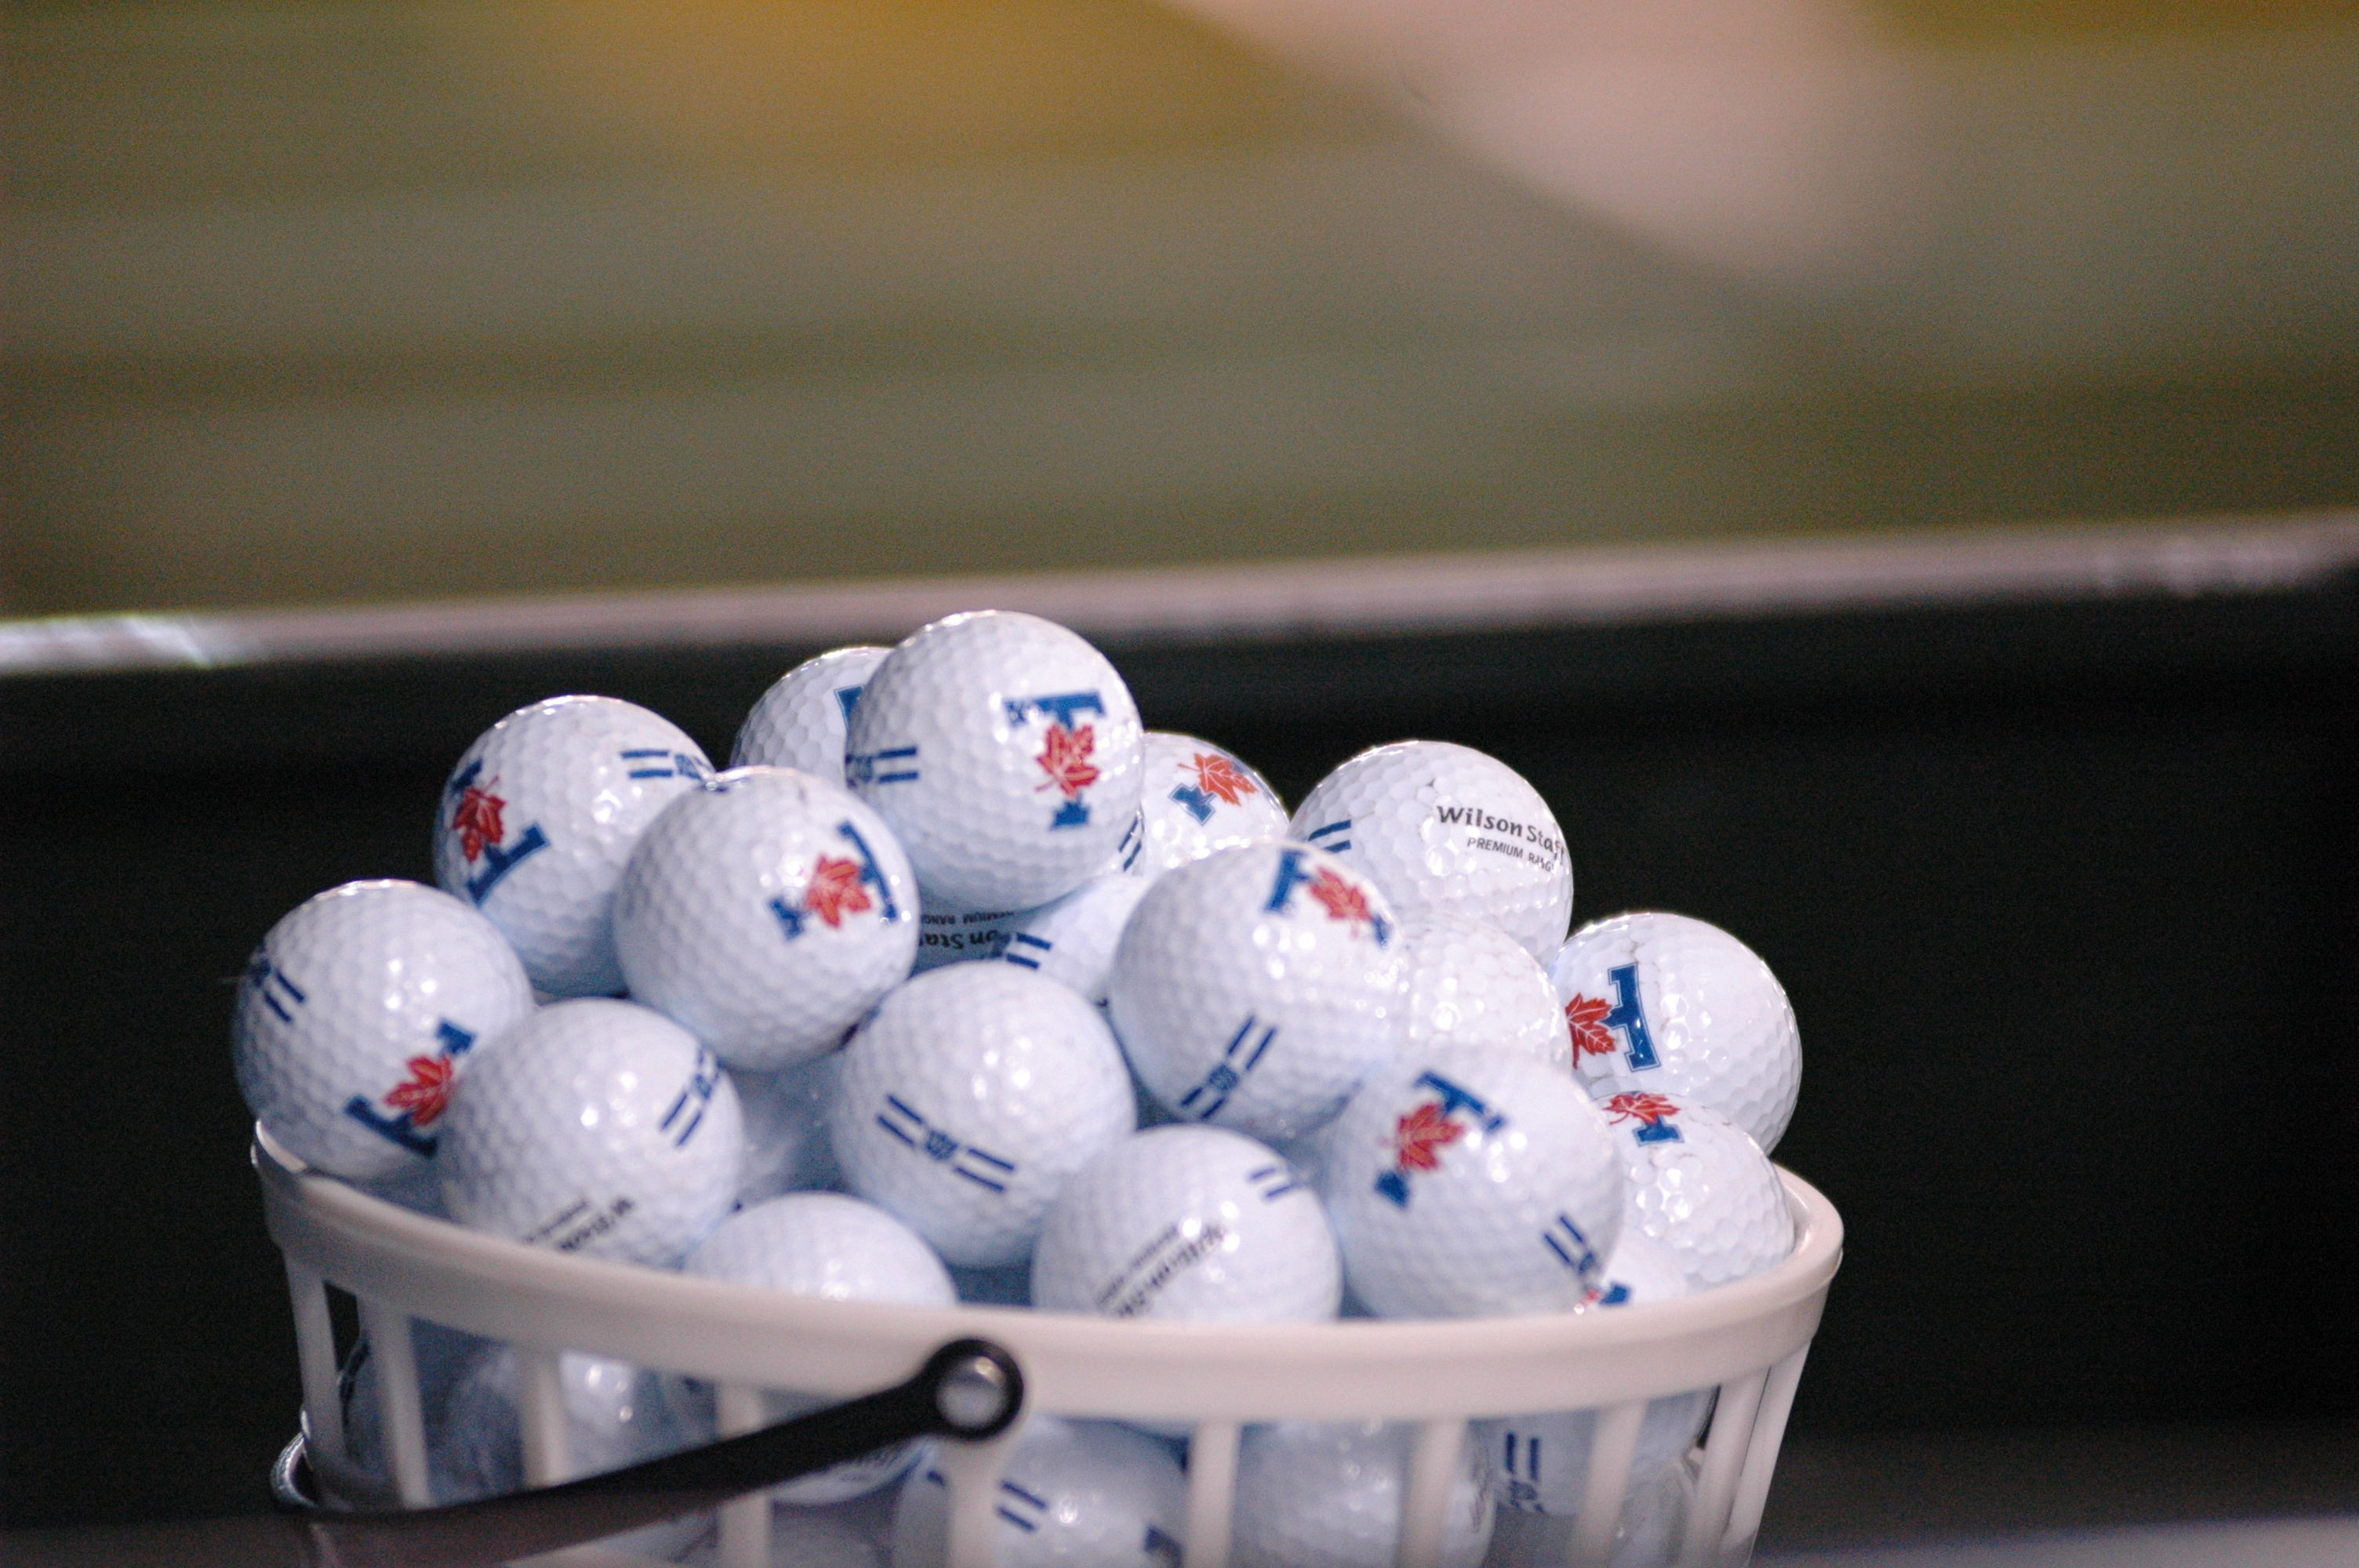 Bucket of golf balls with UofT logo on them